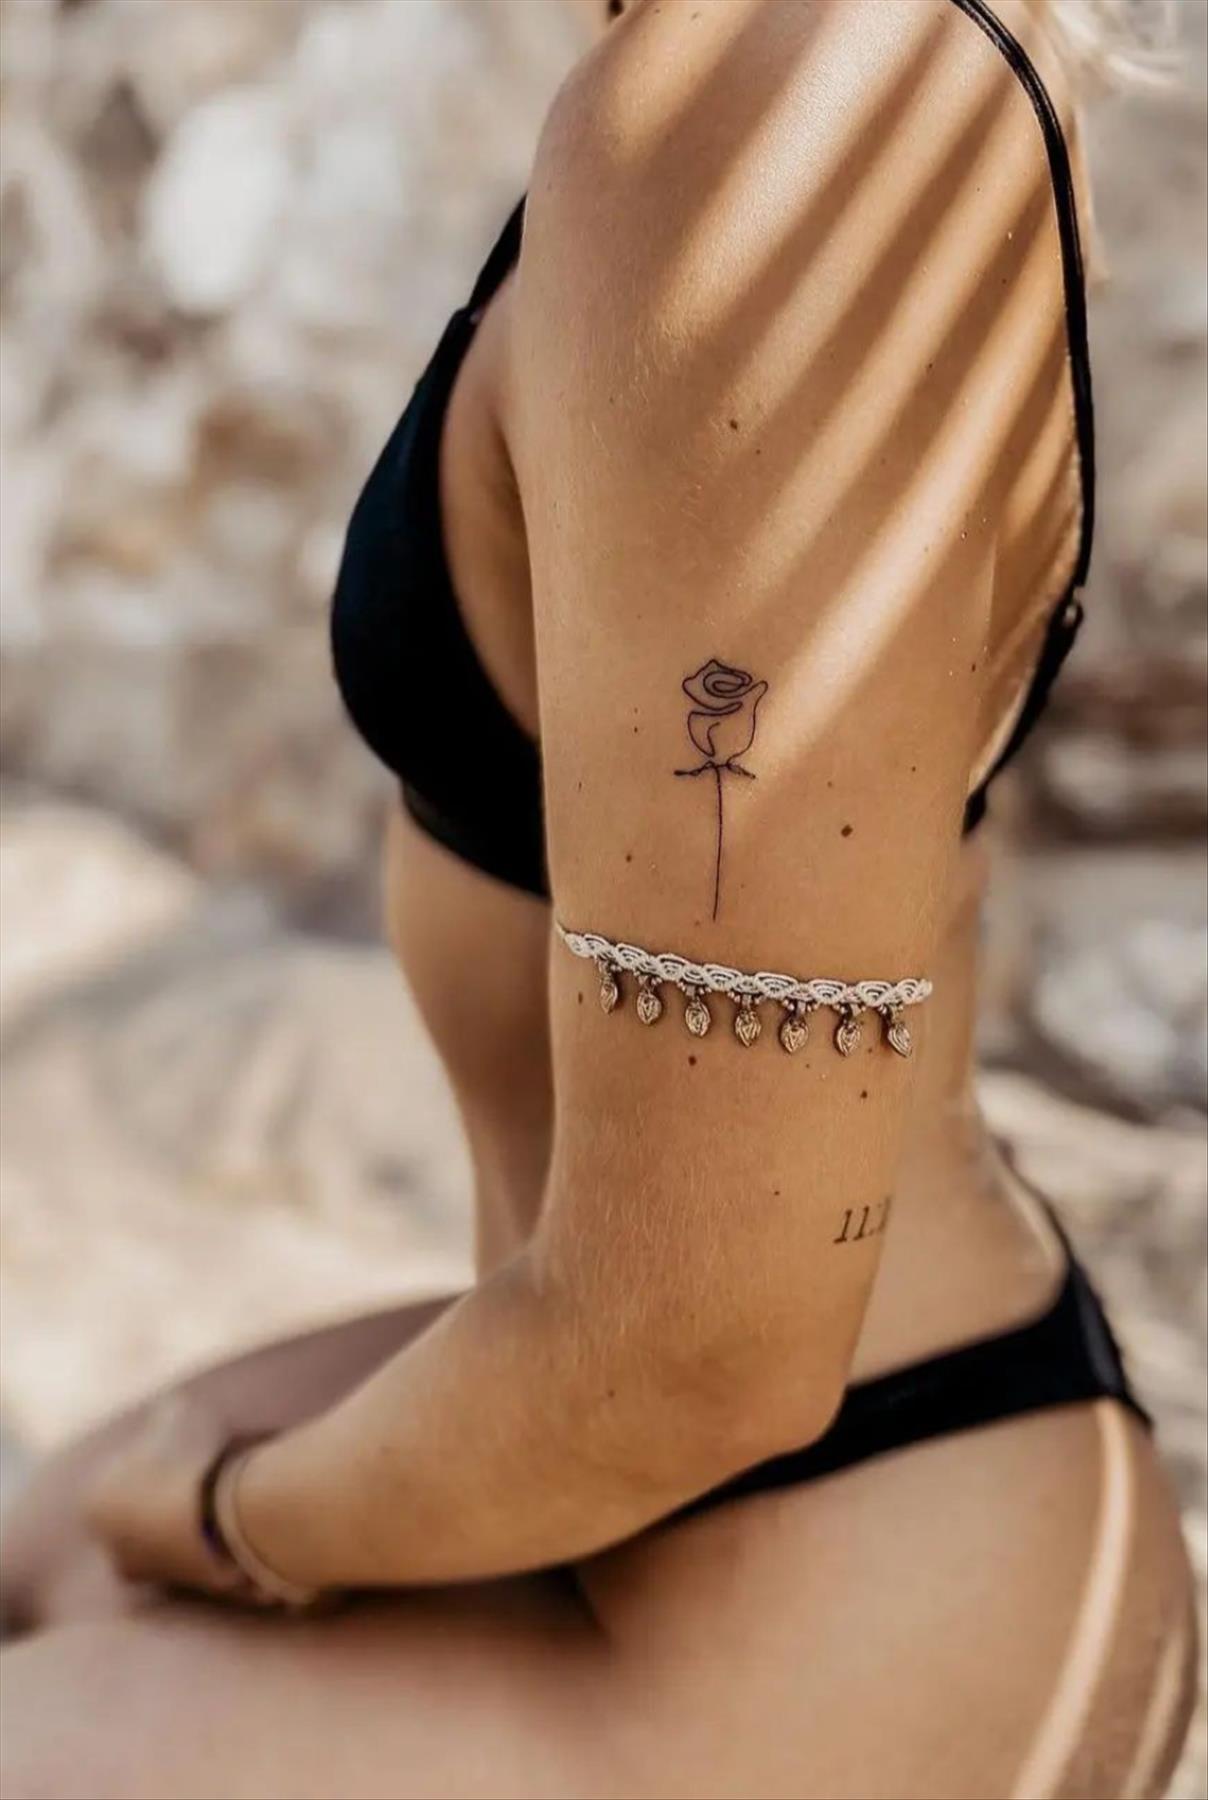 Hot tattoo designs for women when wearing Bikini this Summer